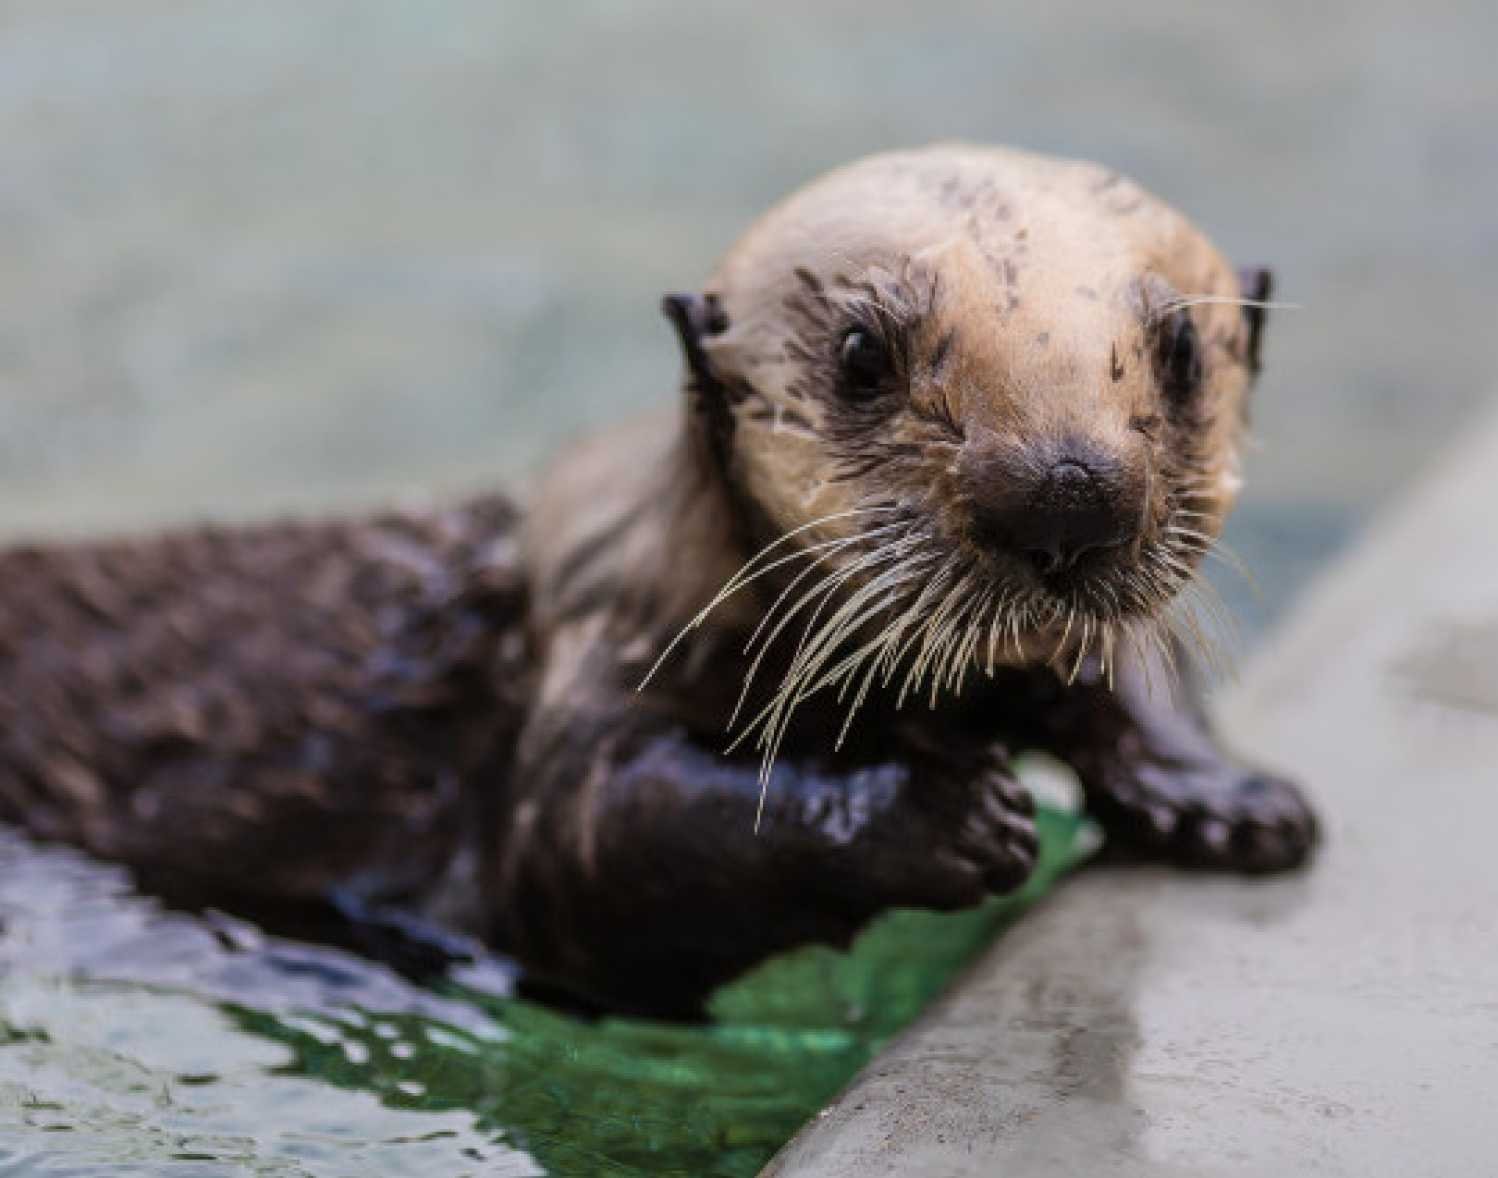 Southern sea otter USFWS permit MA101713-1, photo © The Marine Mammal Center 